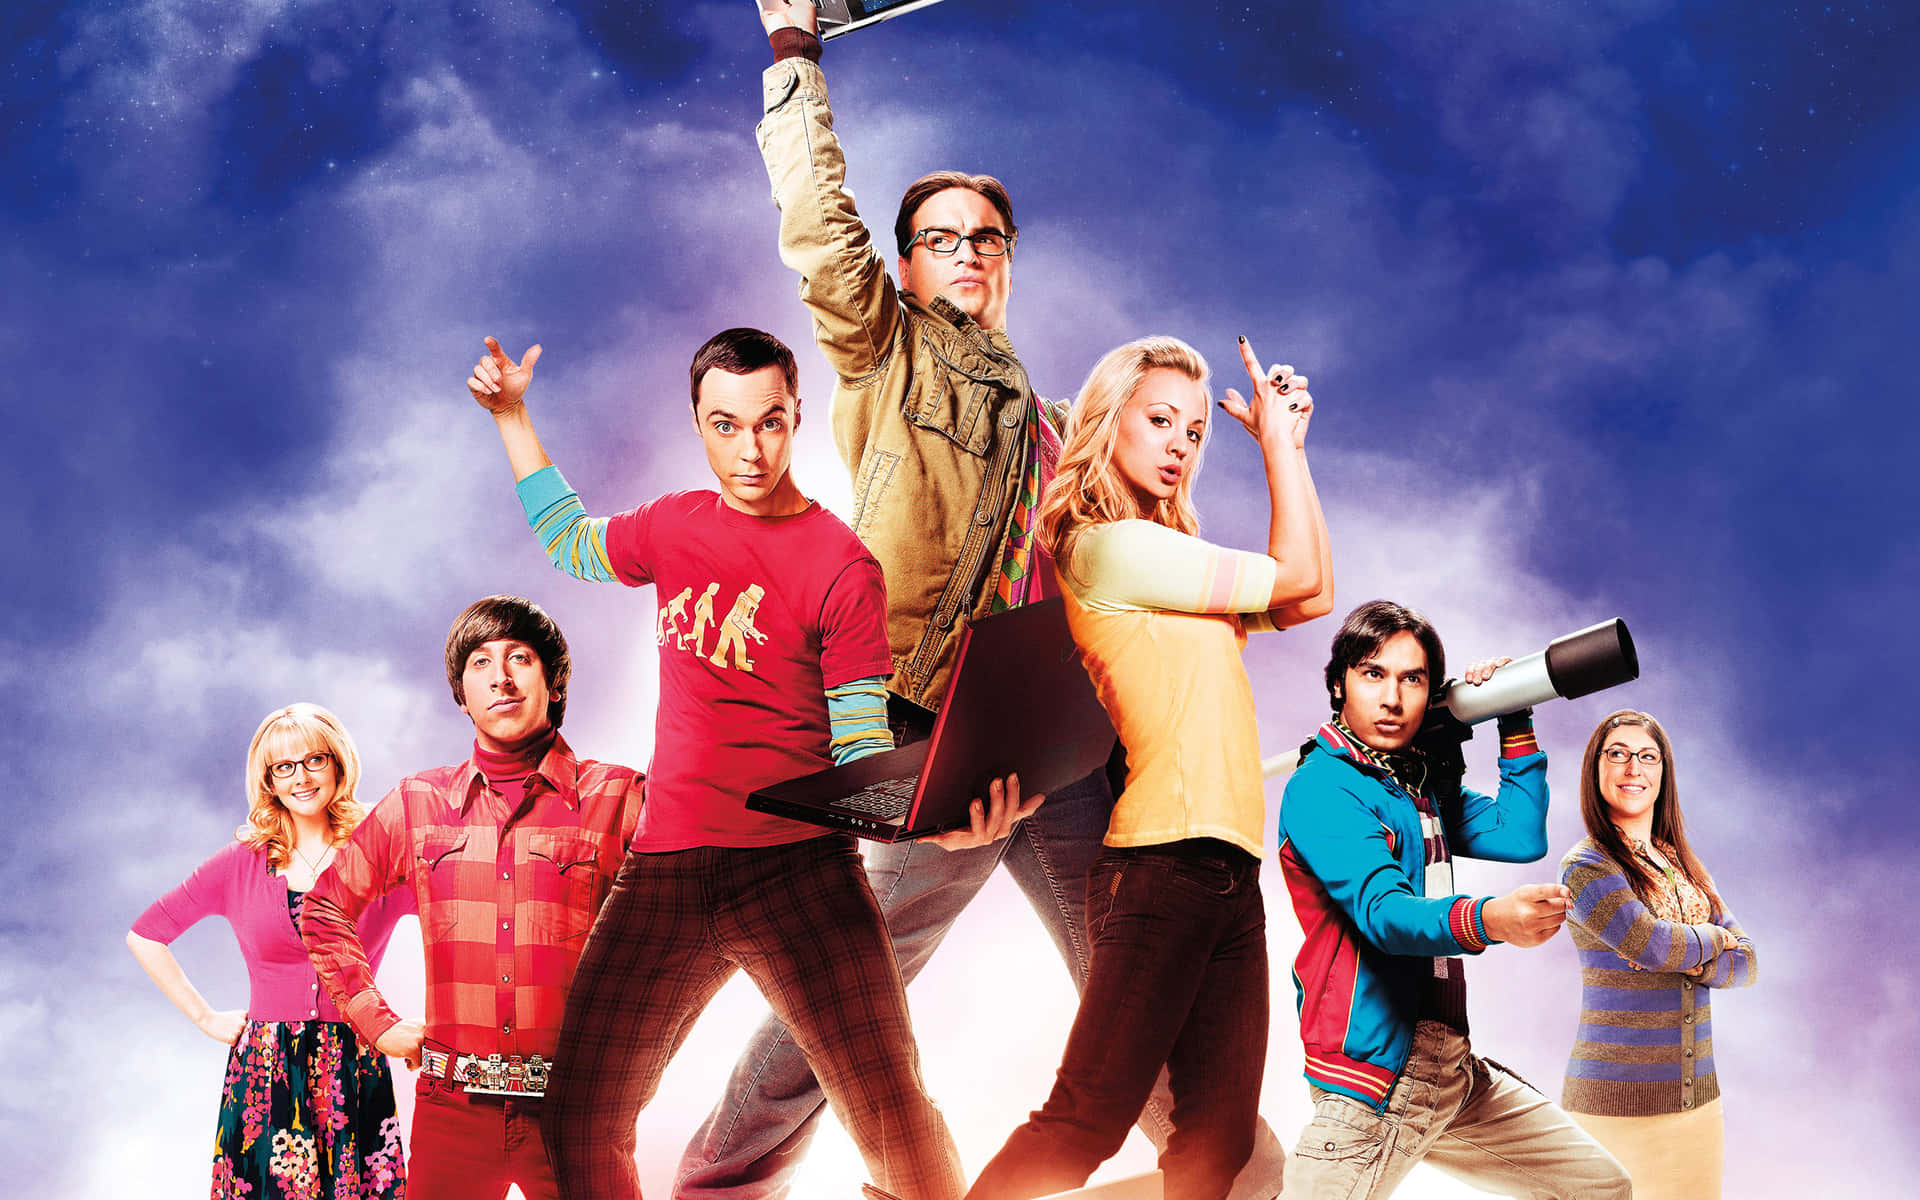 Teorie velkého třesku / The Big Bang Theory / CZ